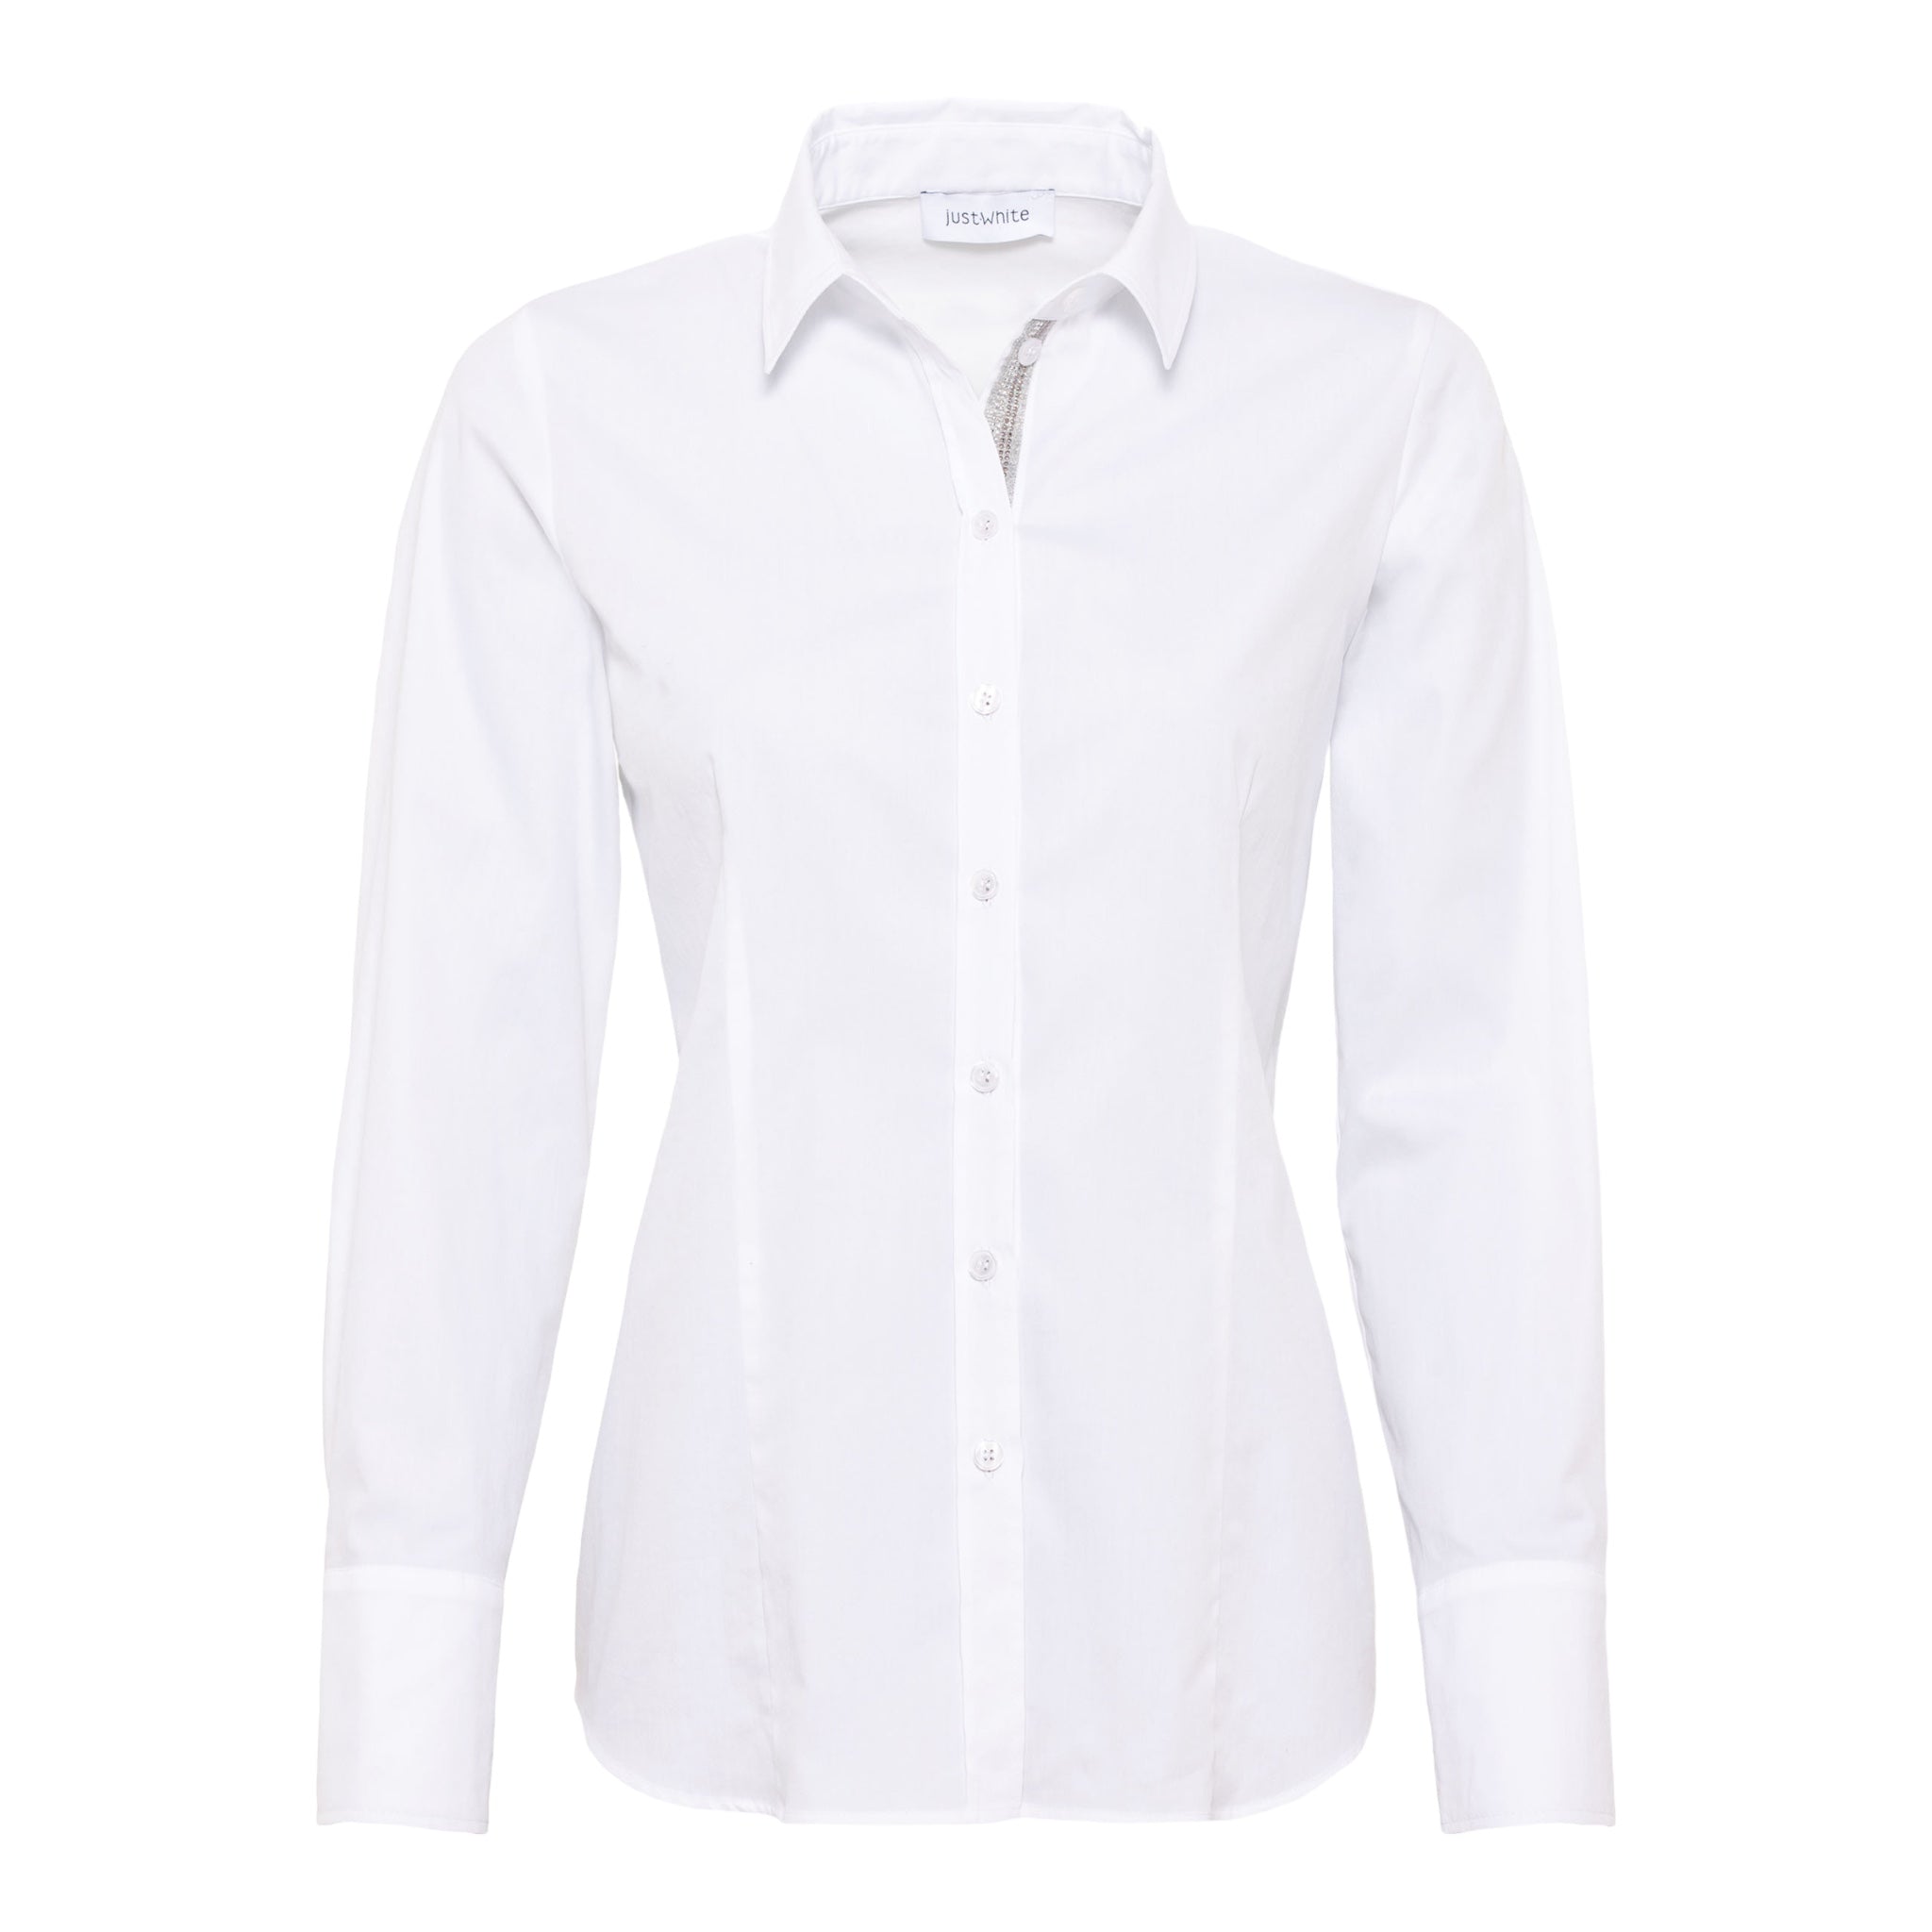 Just White Long Sleeve Shirt White